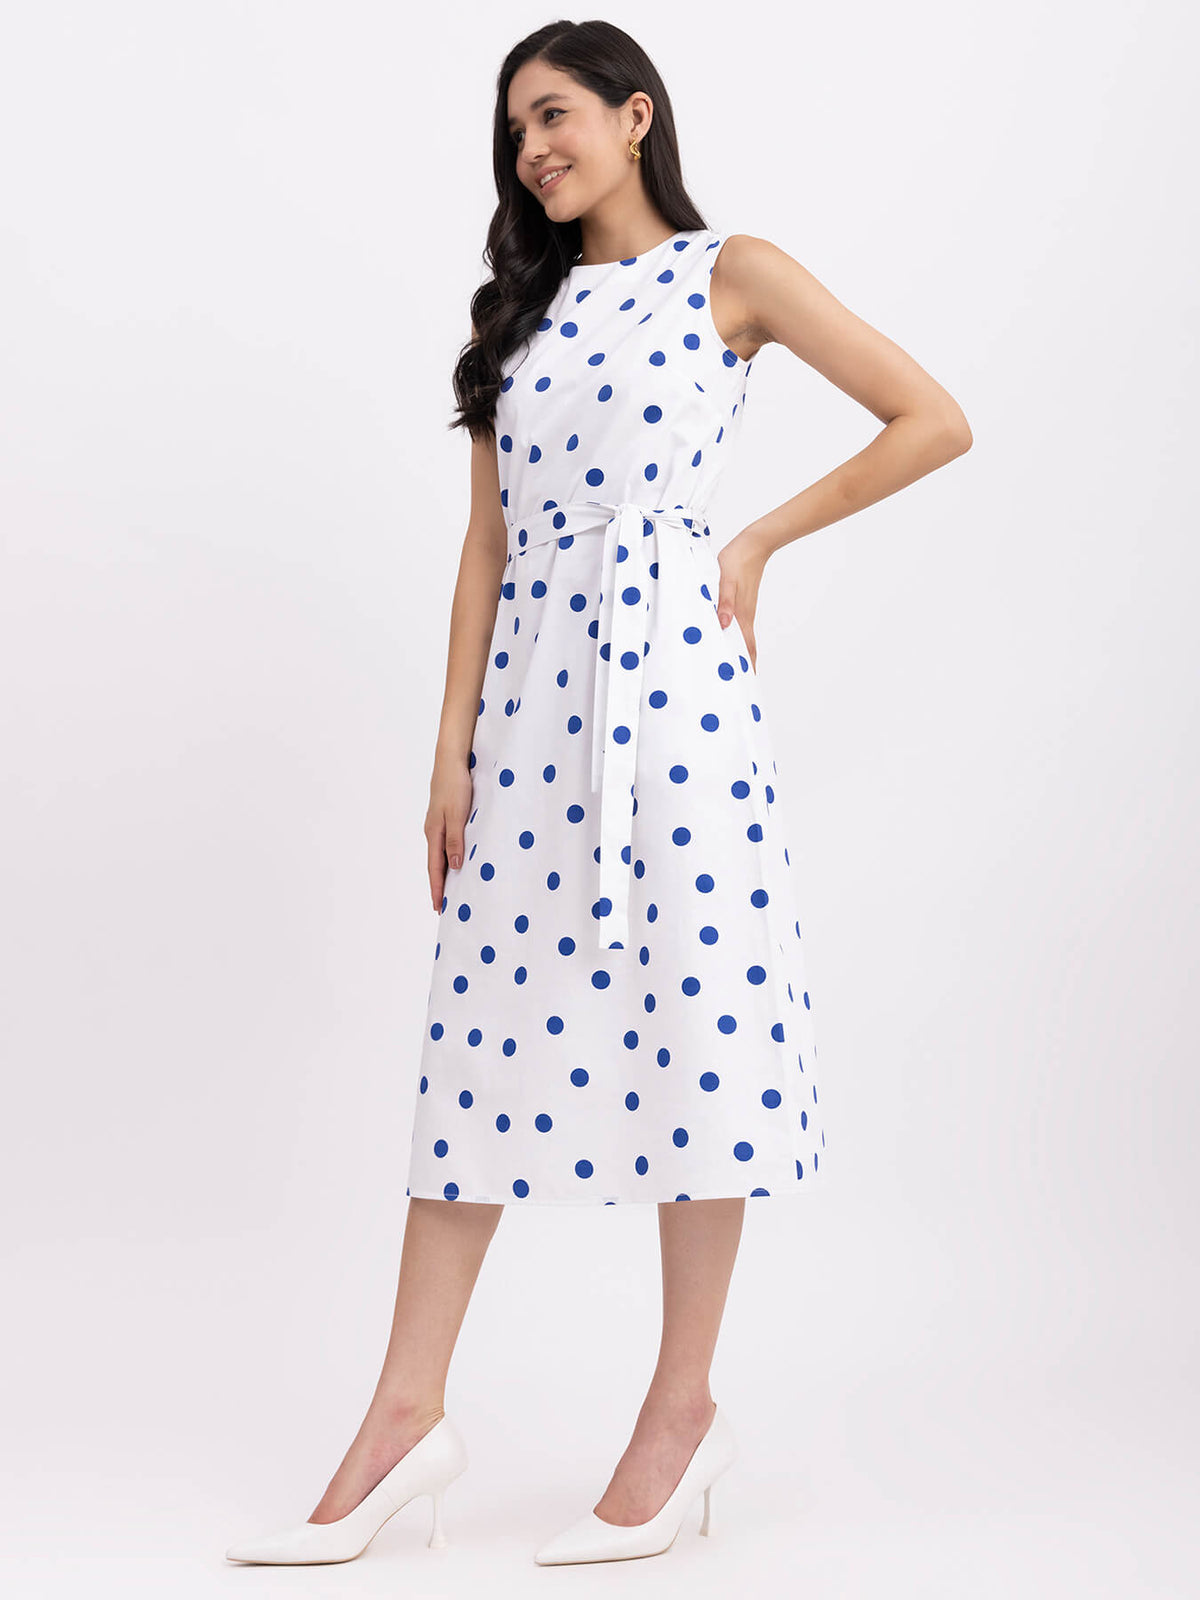 Cotton Polka Dot Dress - White And Blue